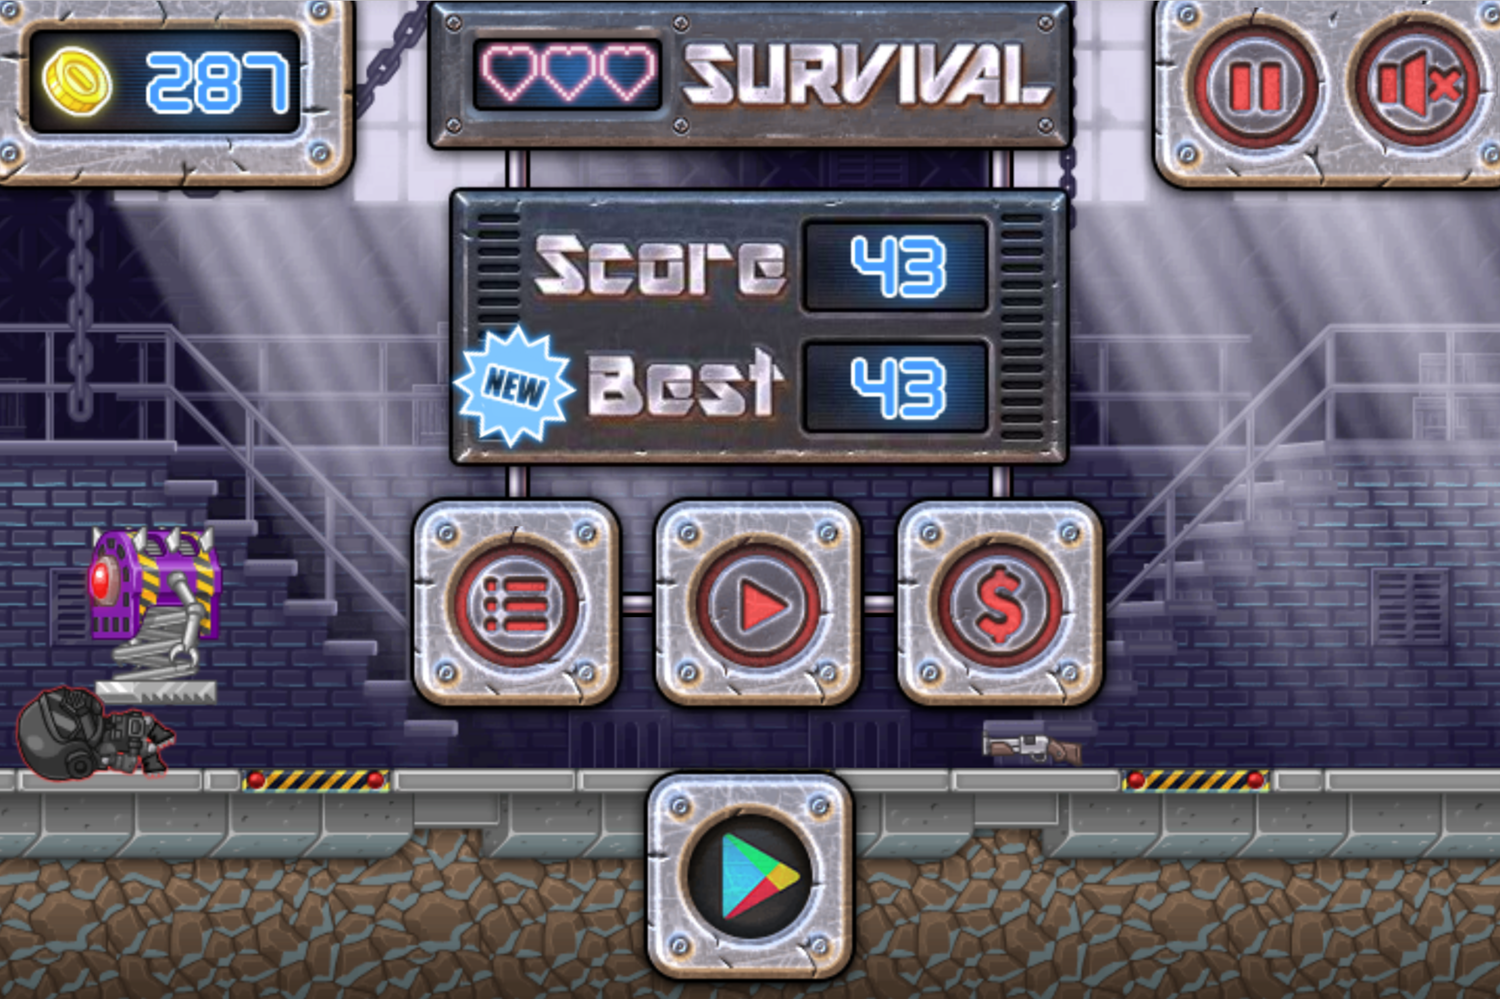 Total Recoil Game Survival Mode High Score Screen Screenshot.